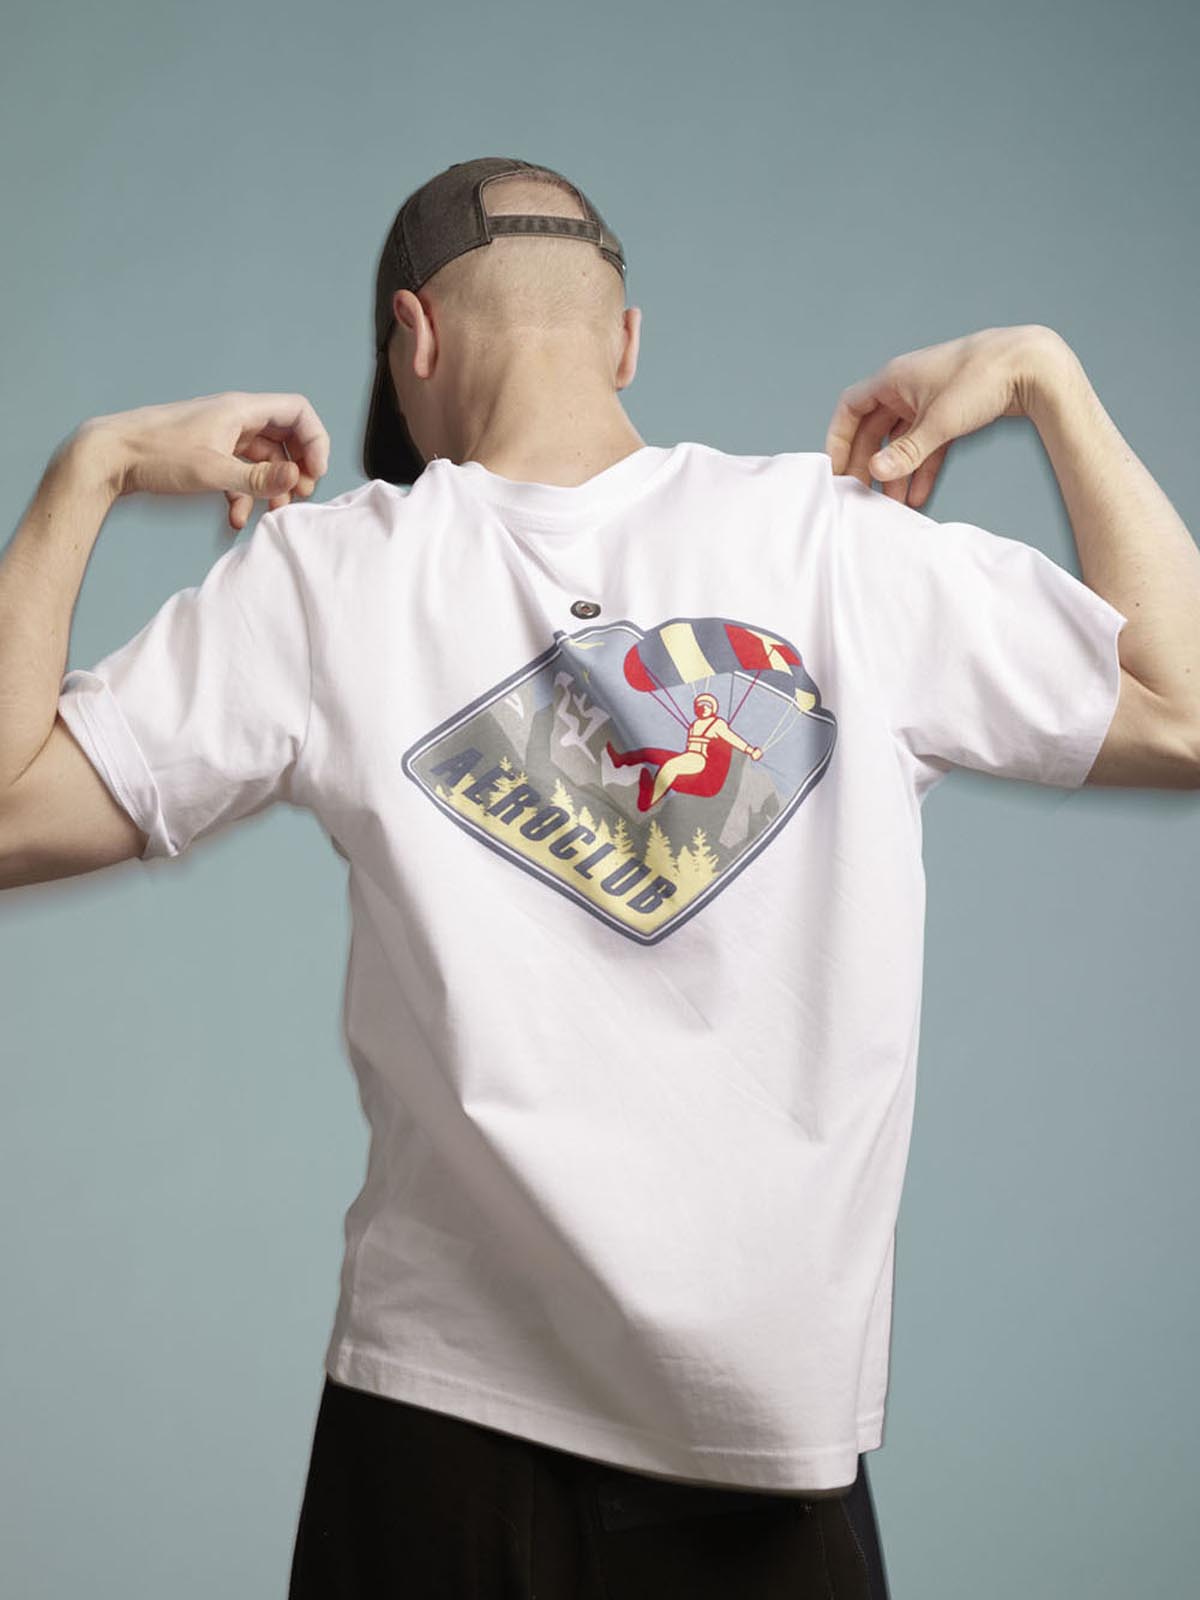 Kona T-shirt stampata sul retro